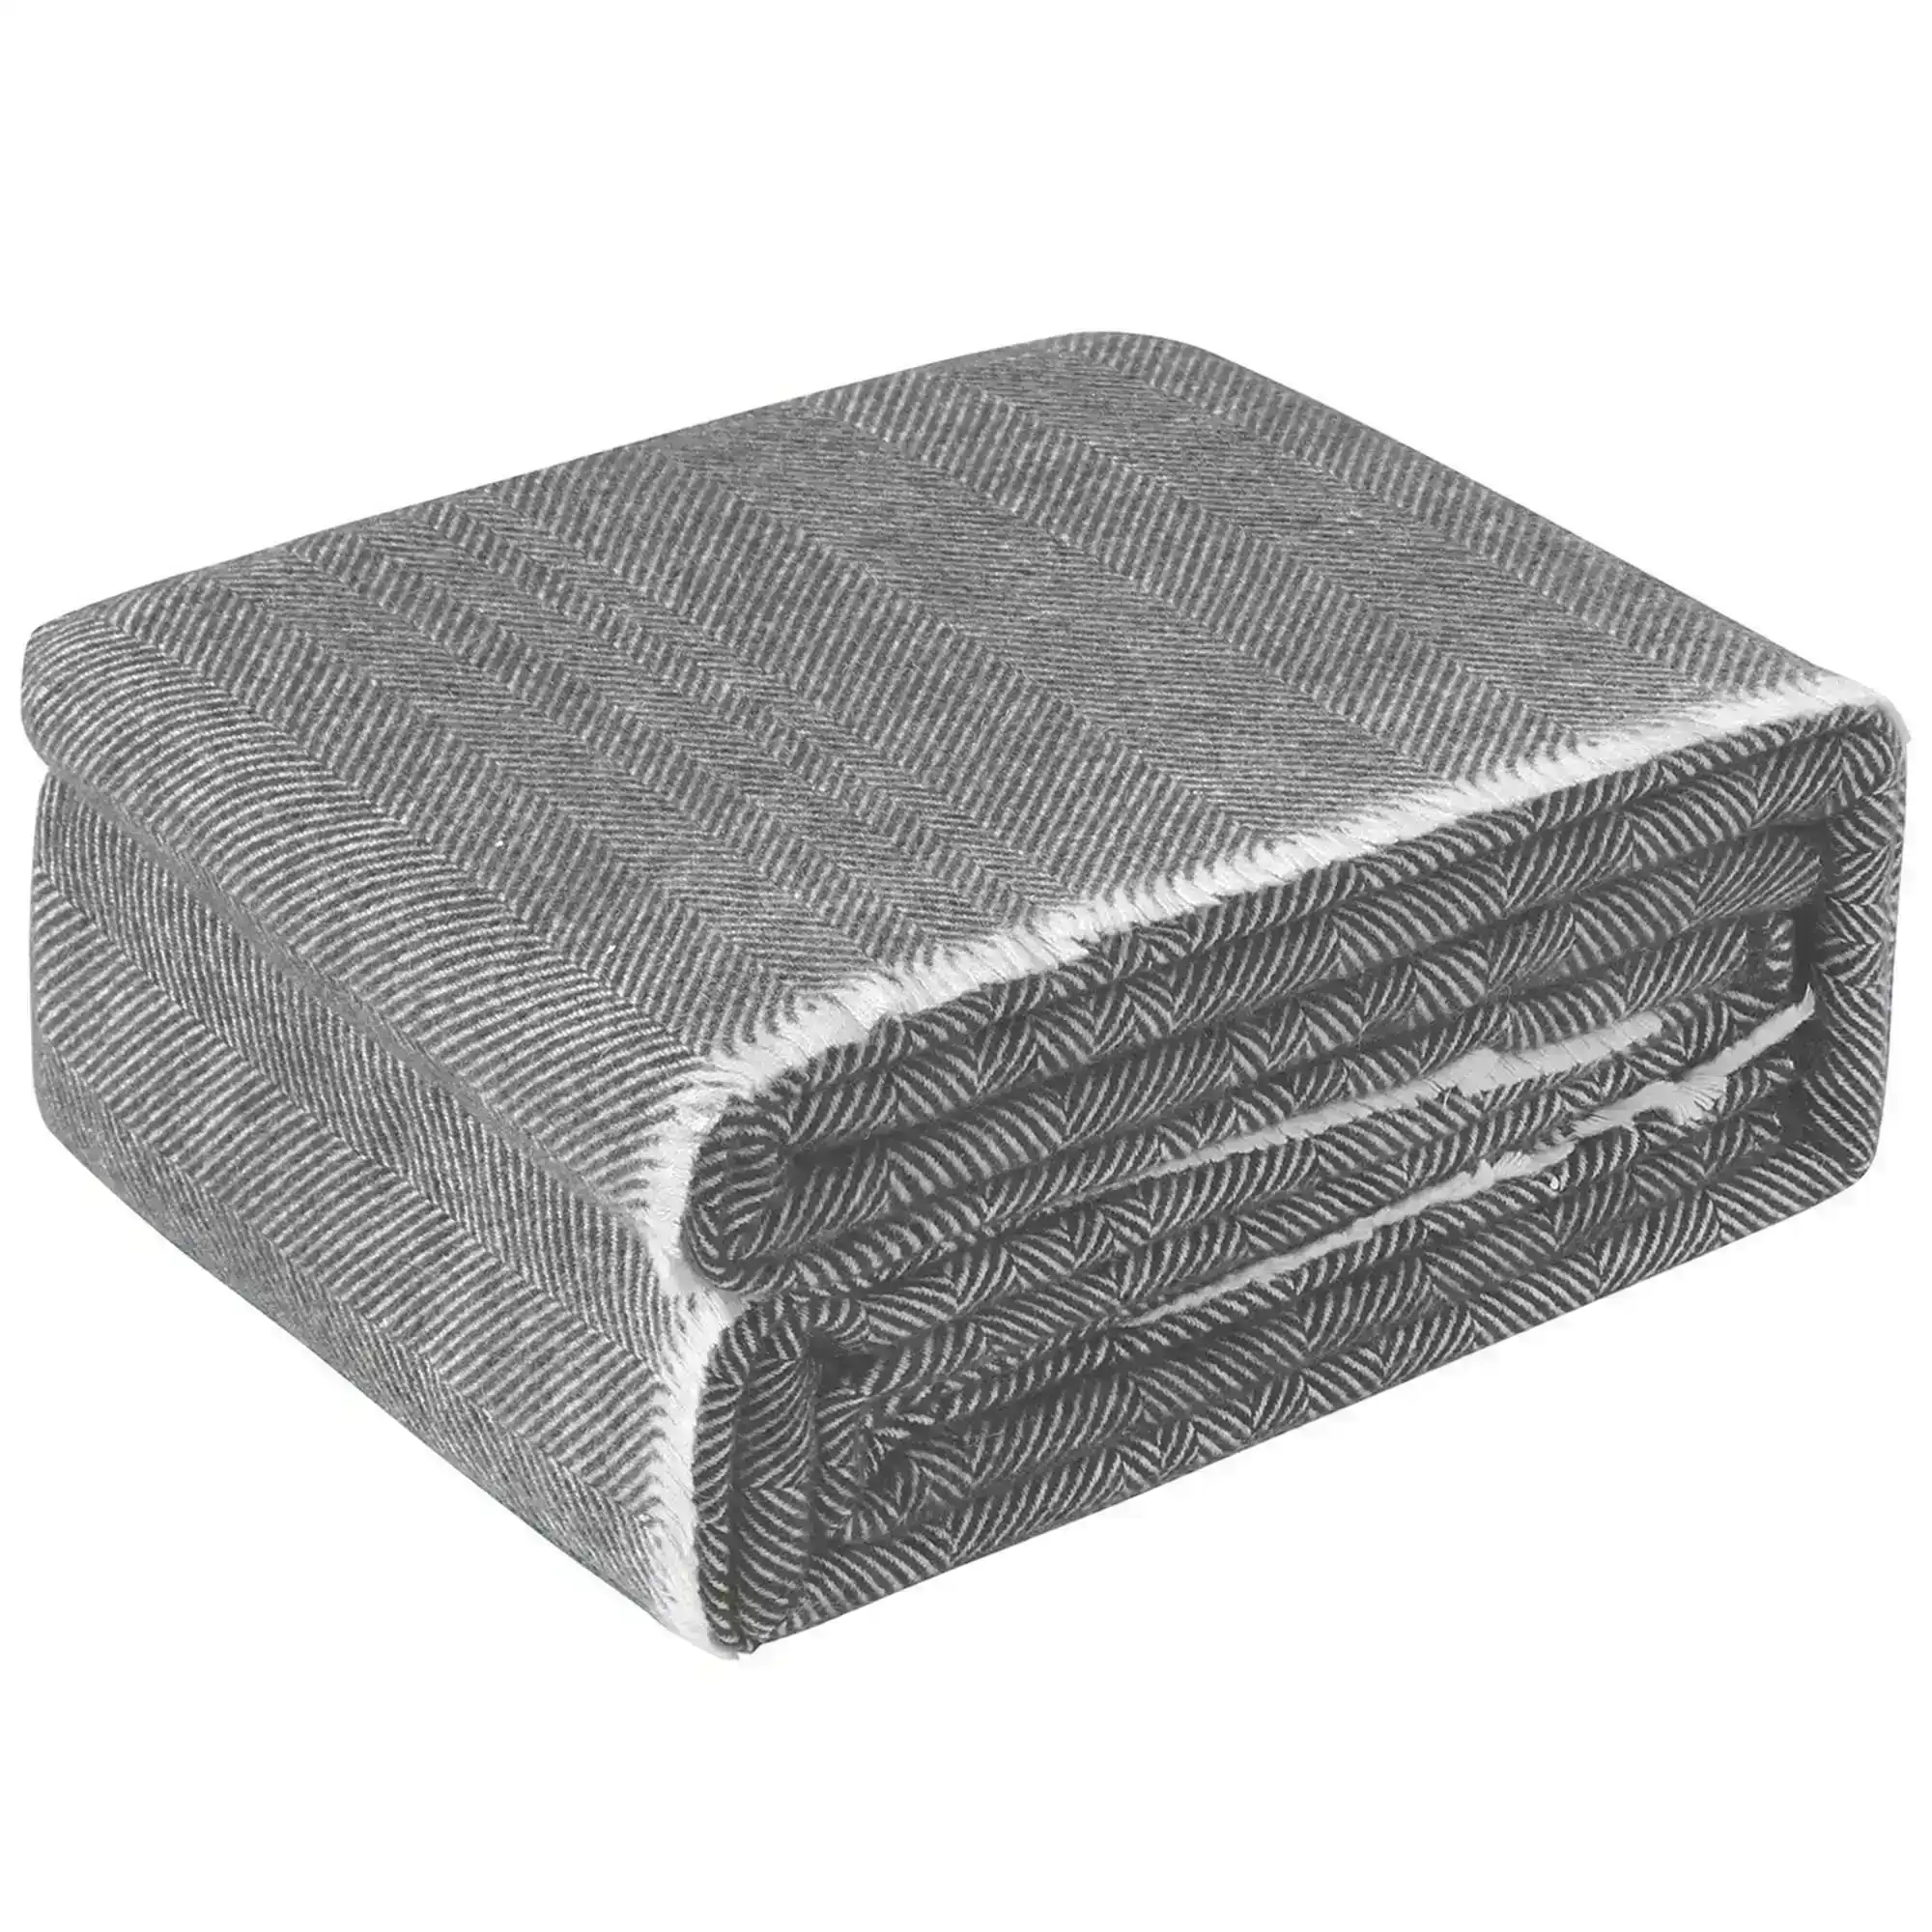 Accessorize Grey Herringbone Wool Blanket